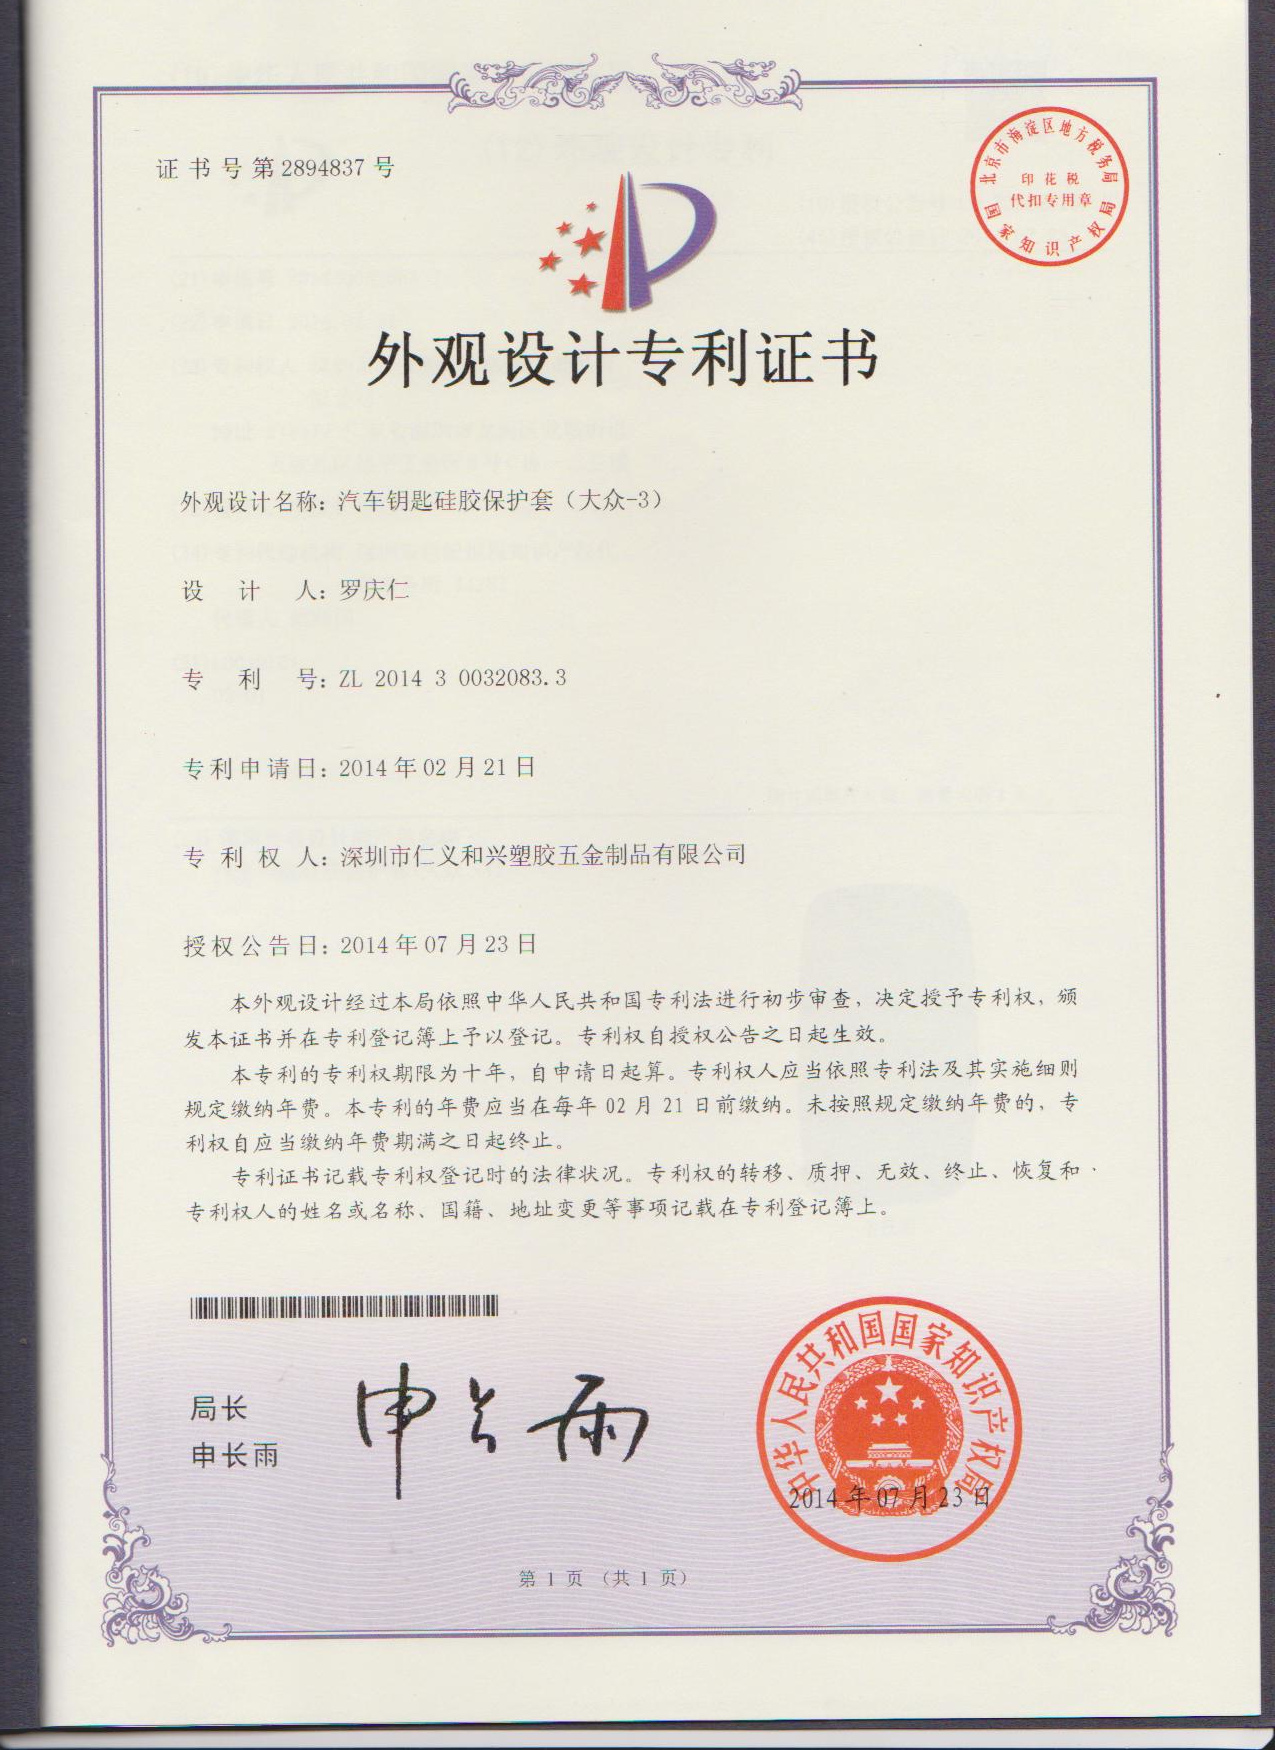 Shenzhen RYHX silicone car key appearance patent-ZL 2014 3 0032083.4